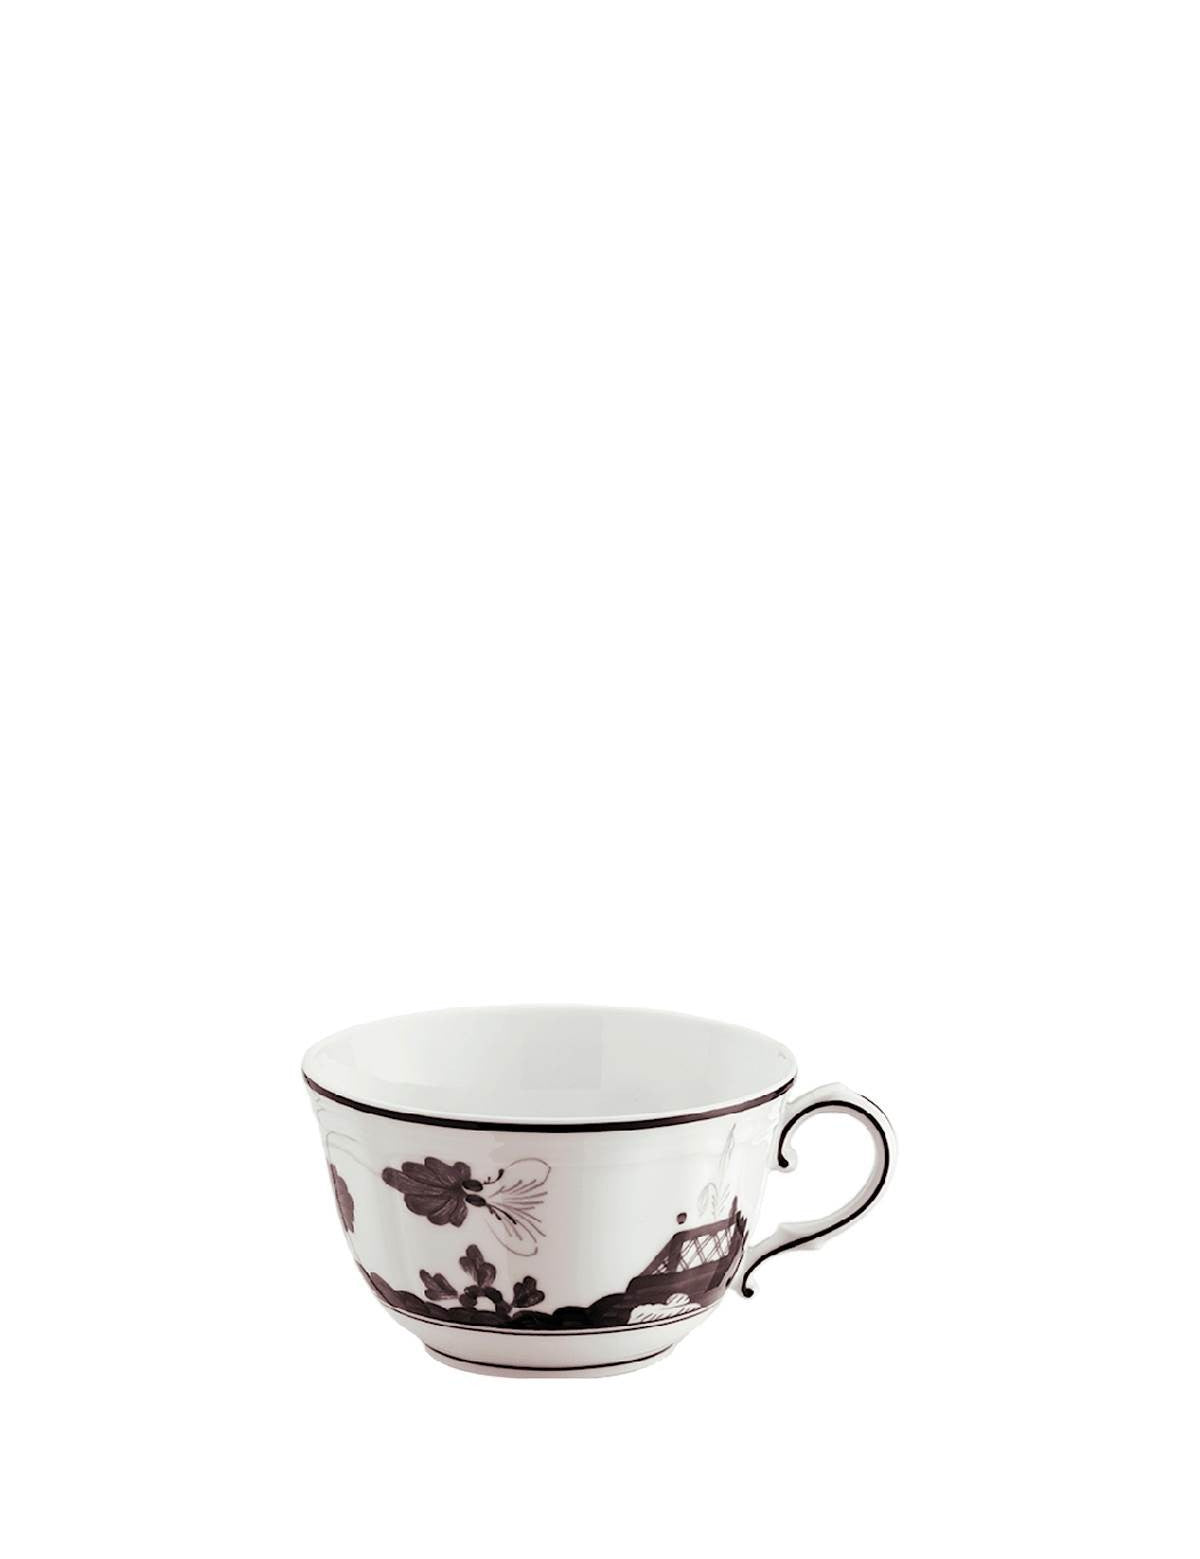 ginori-1735-oriente-italiano-tea-cup.jpg